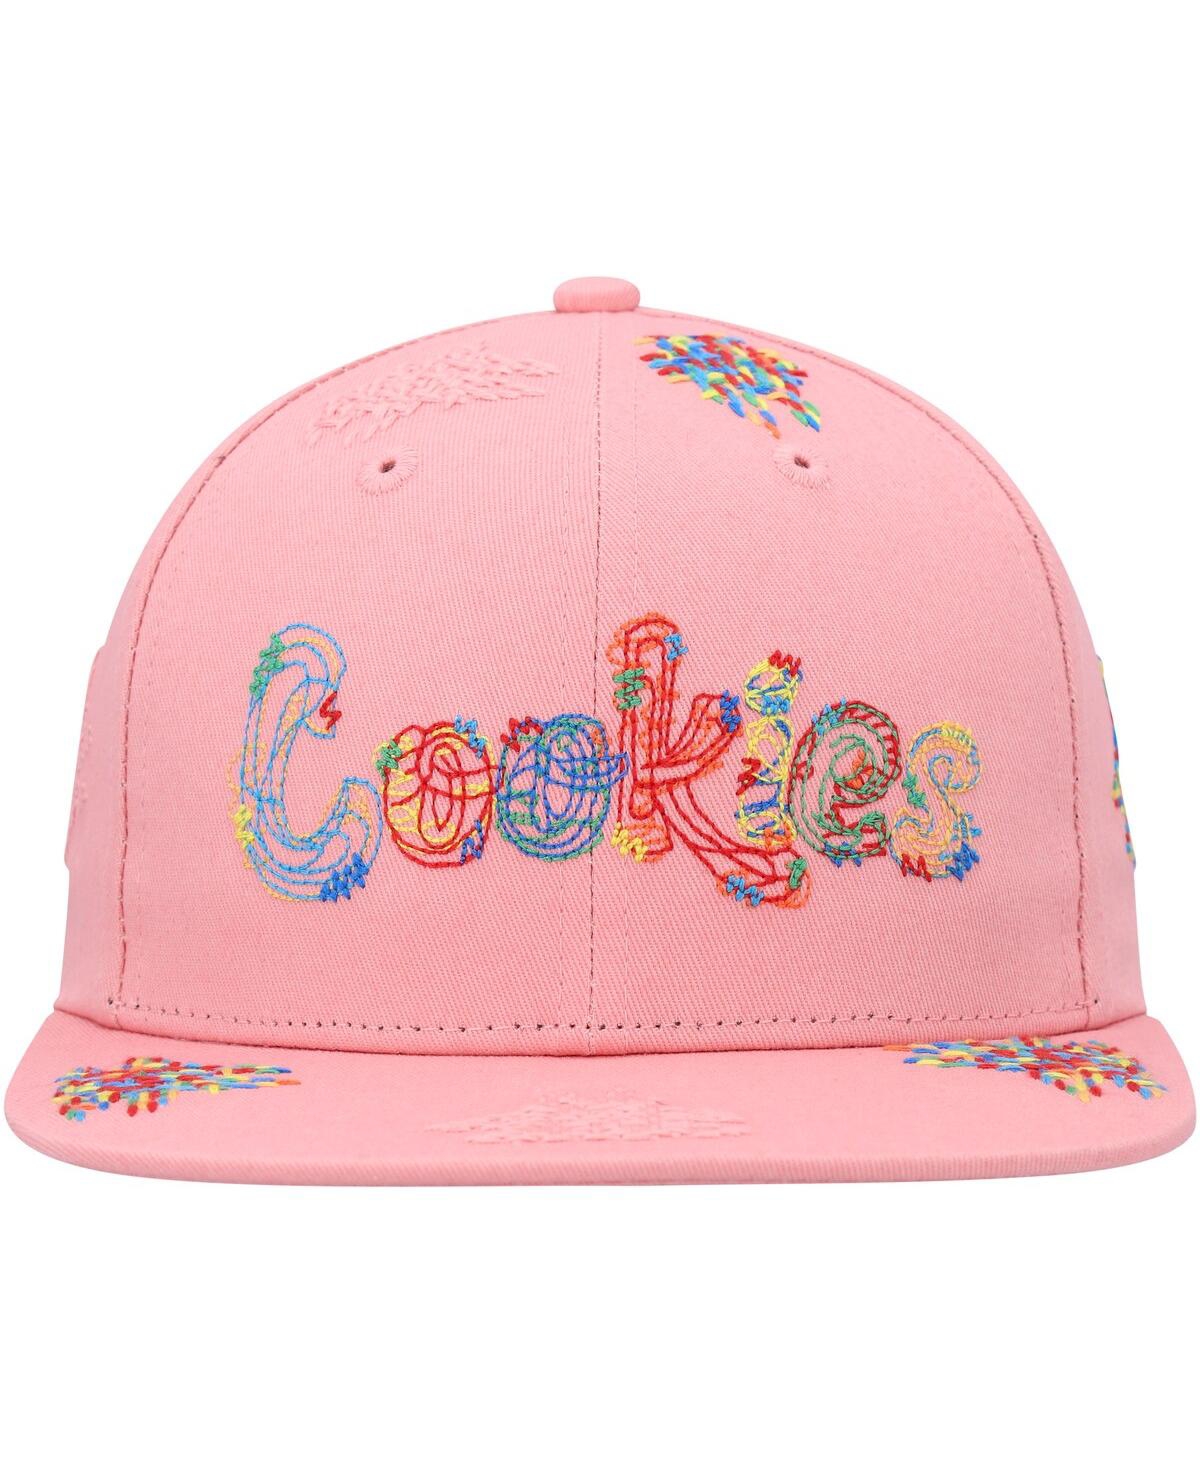 Shop Cookies Men's  Coral Anthem Snapback Hat